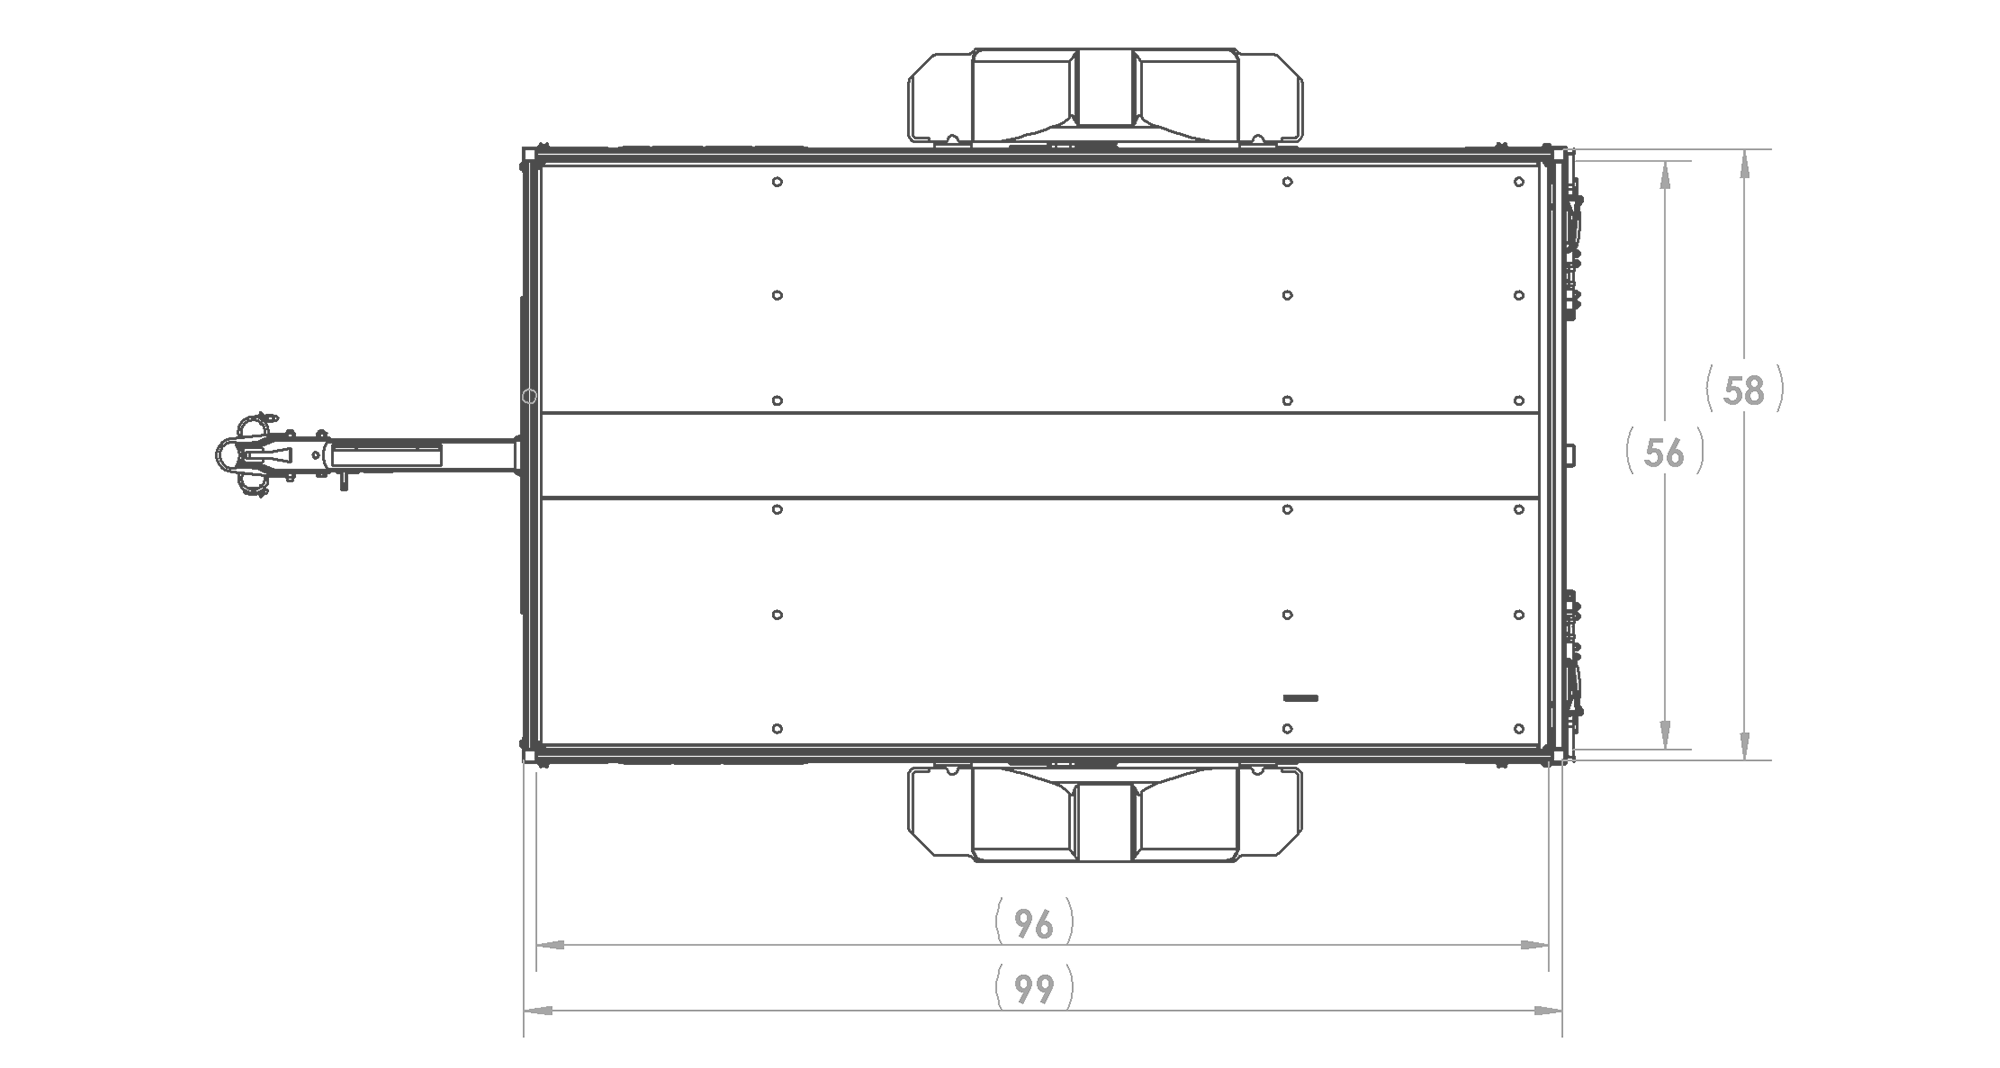 Karavan Trailer's 4.5x8ft. Aluminum Utility Trailer, Top View Measurements